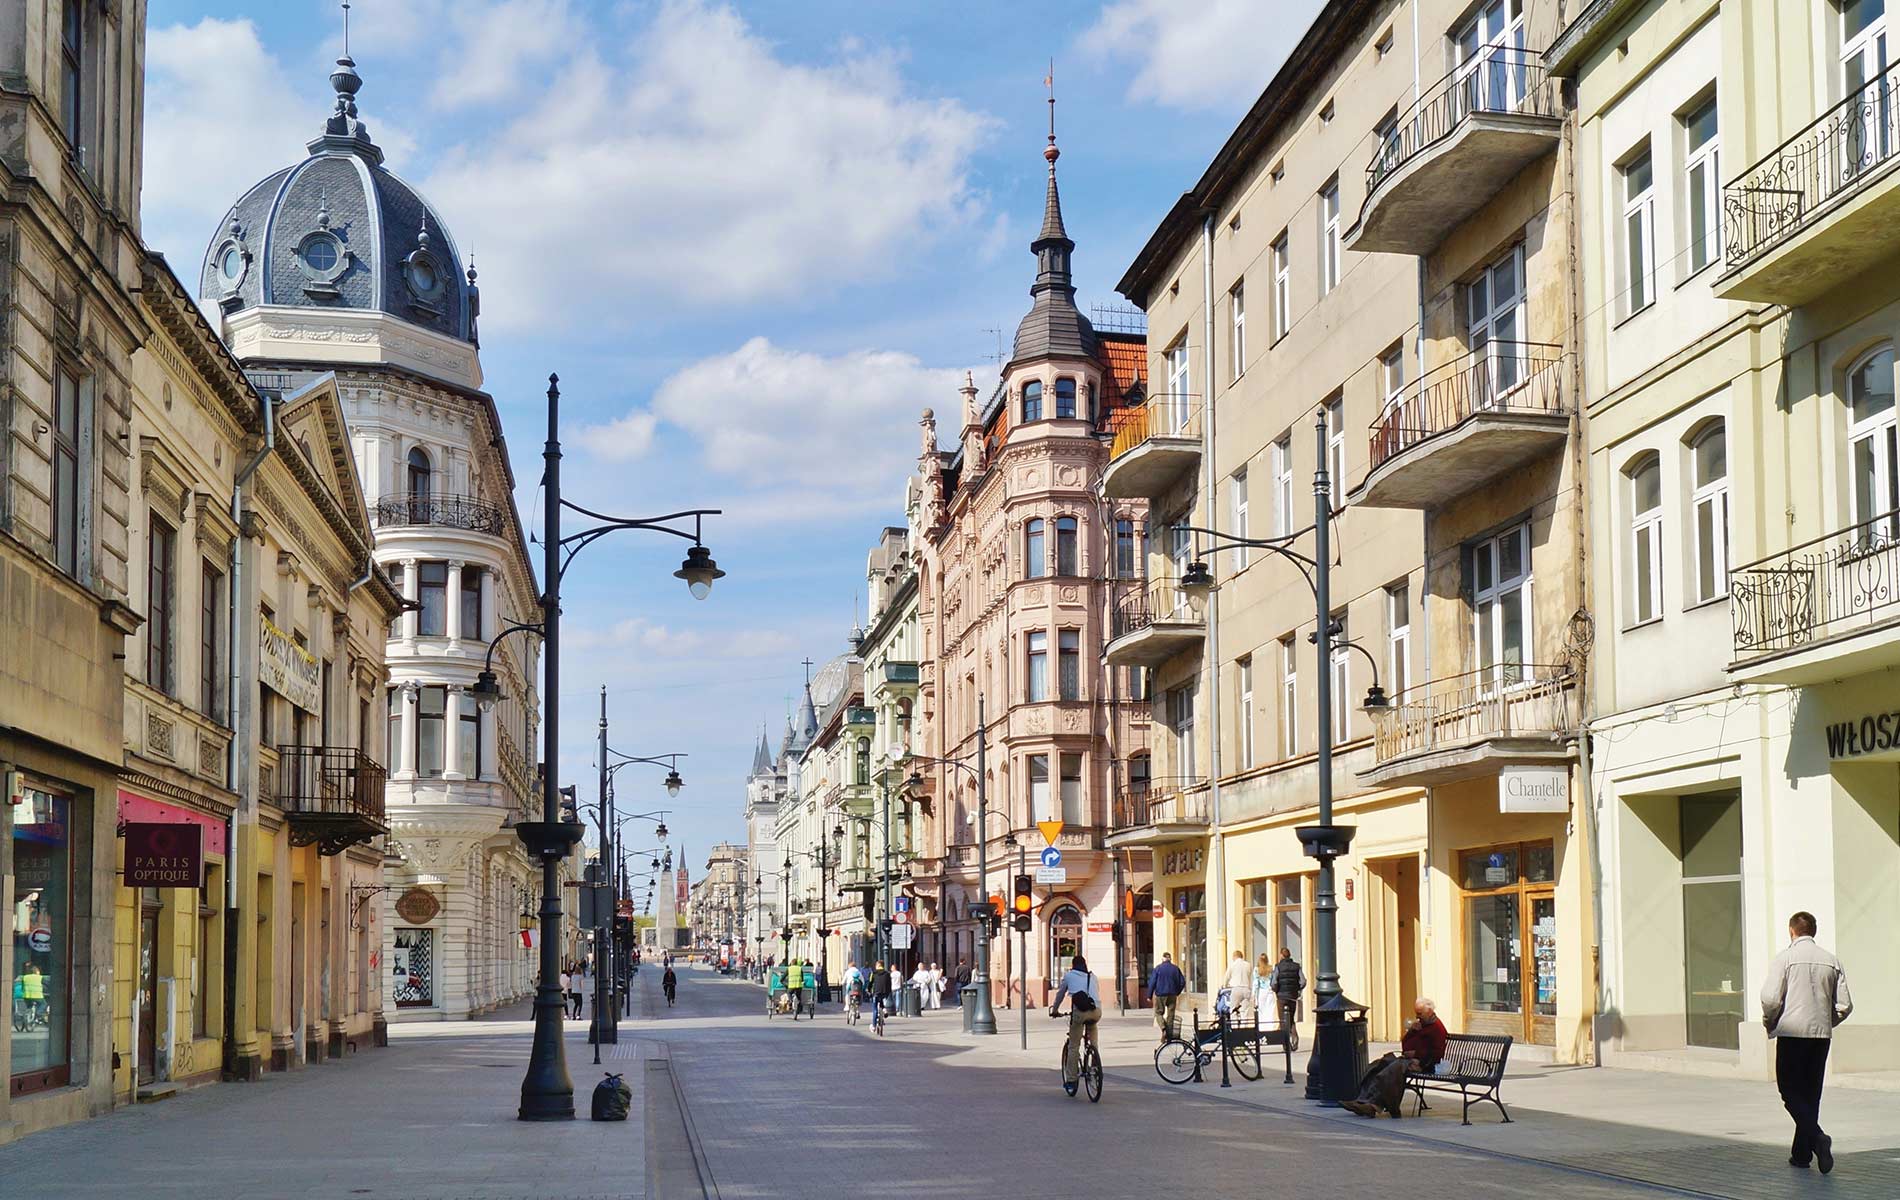 Passersby enjoy a sunny Sunday afternoon on Piotrkowska Street in Lodz. Photo by Mariola Anna S / Shutterstock